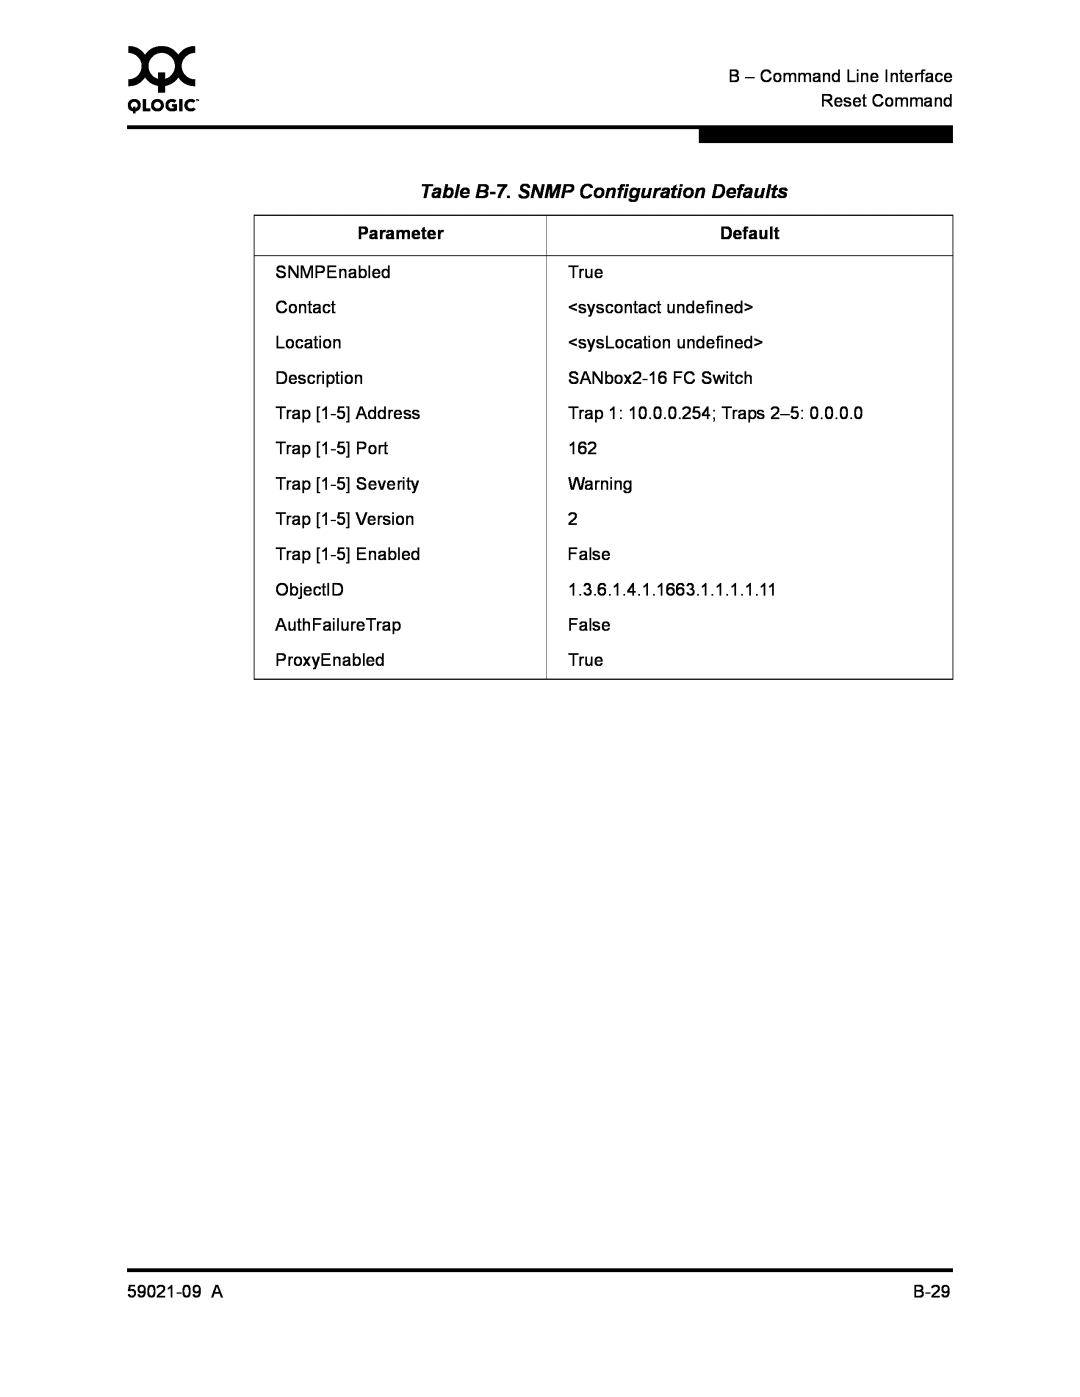 Q-Logic SB2A-16B, QLA2342 manual Table B-7. SNMP Configuration Defaults, Parameter 